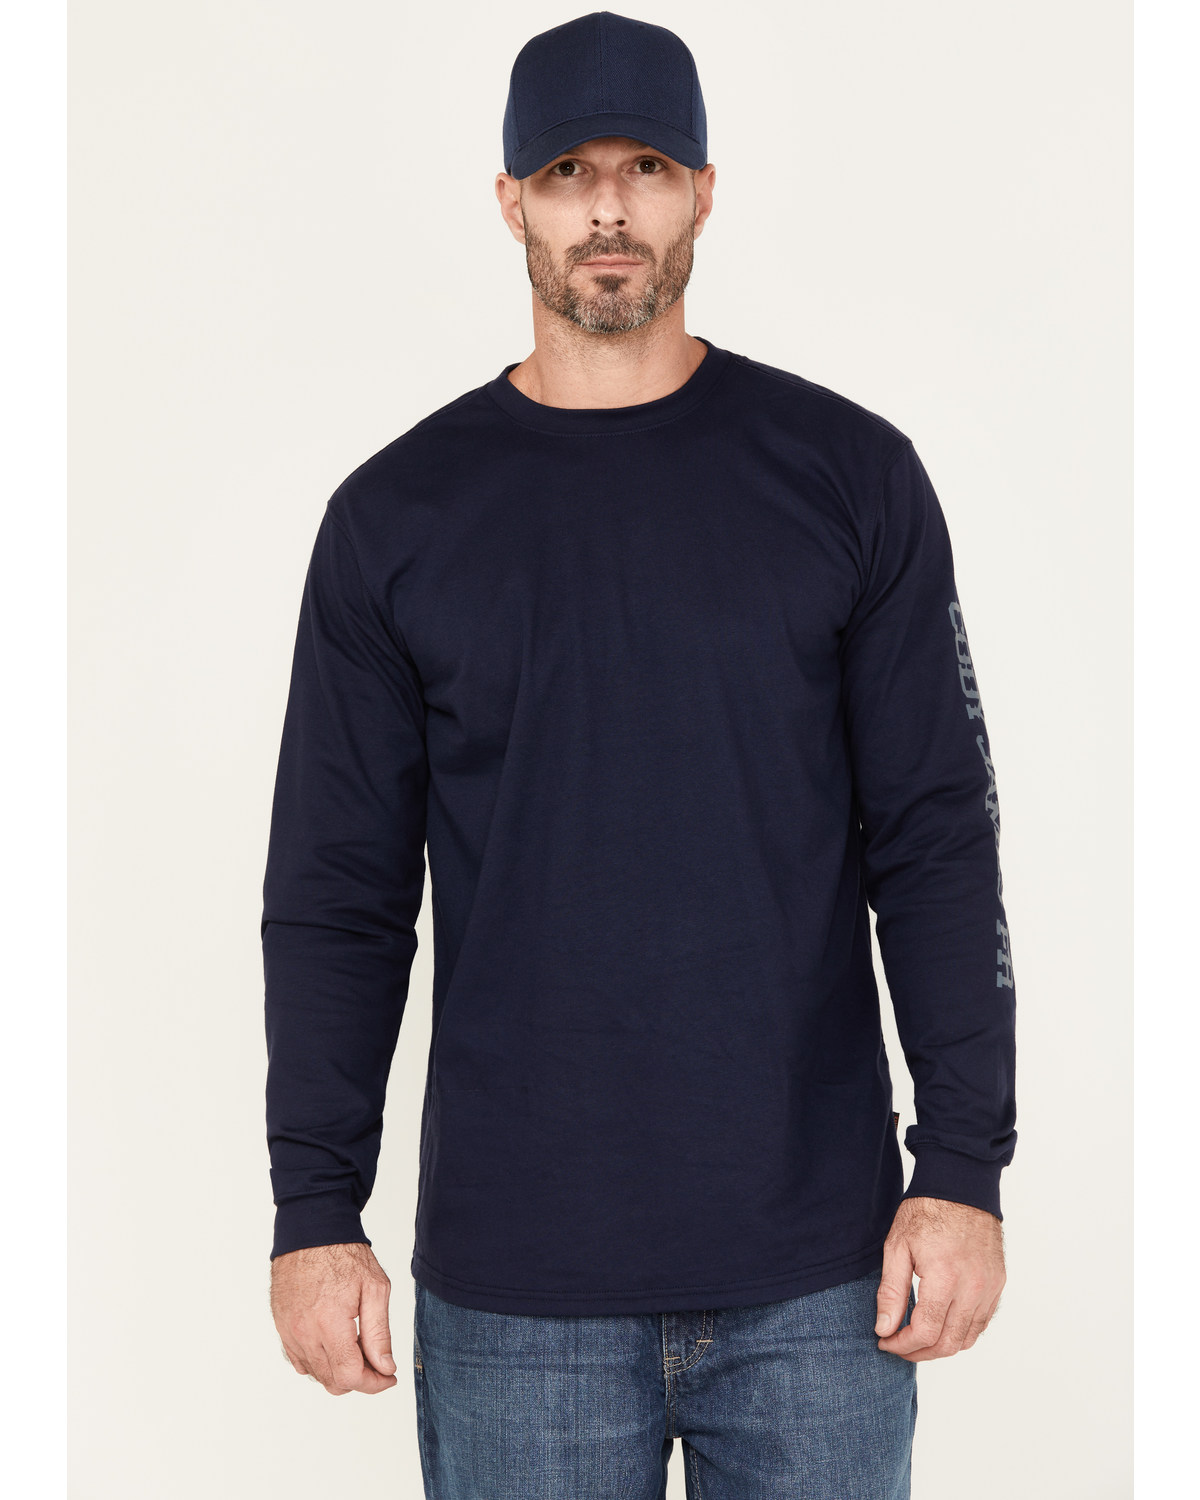 Cody James Men's FR Range Cowboys Graphic Long Sleeve Work T-Shirt